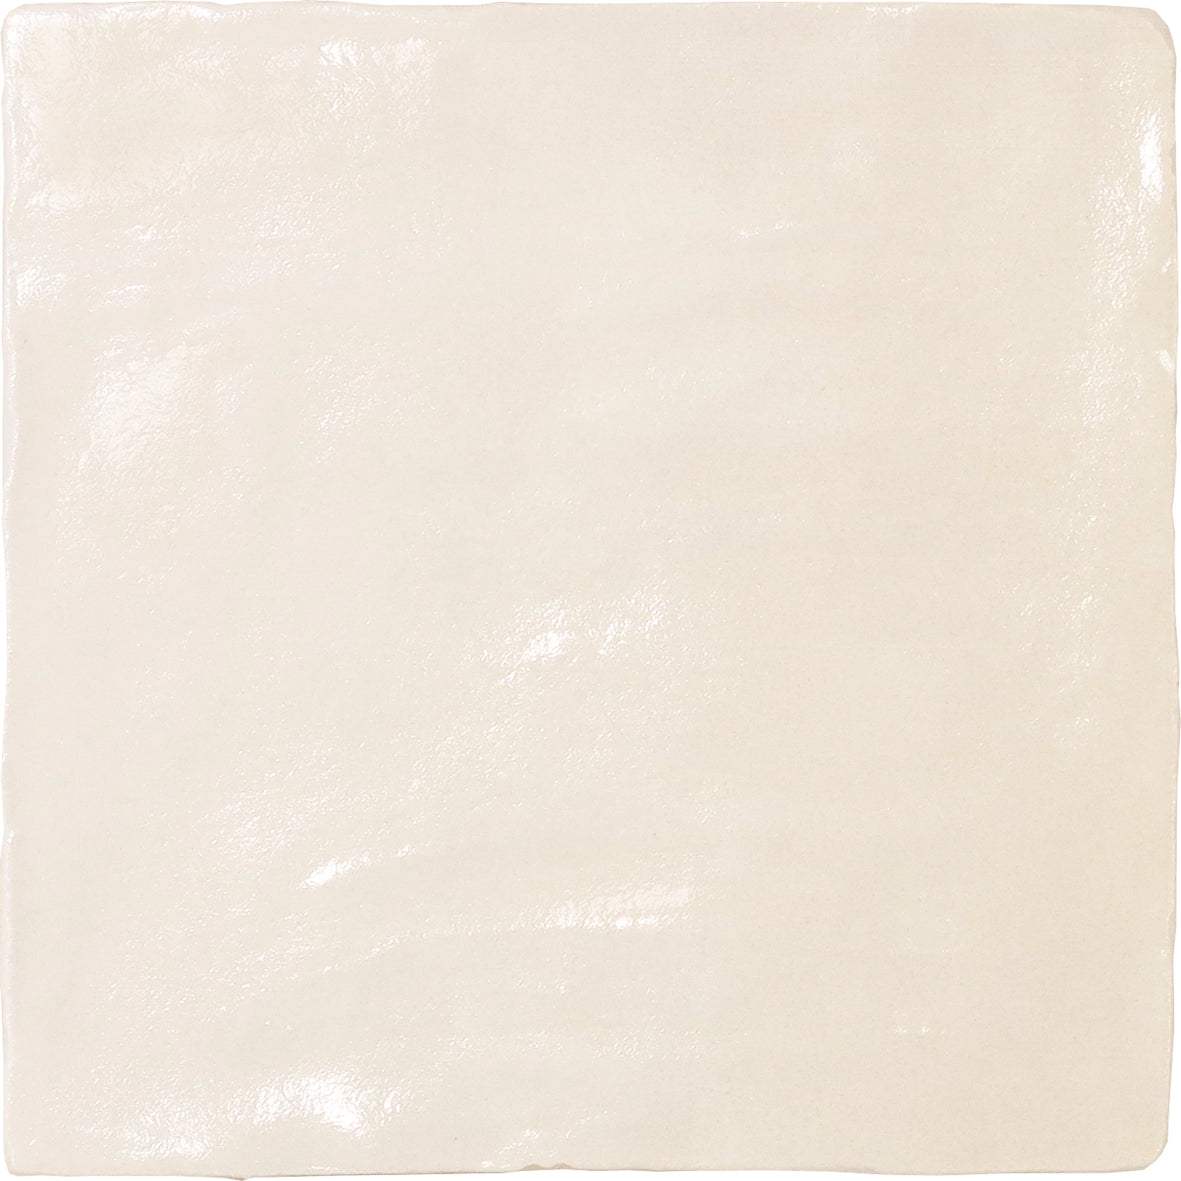 Magma 4x4 Cream Glossy Square Tile